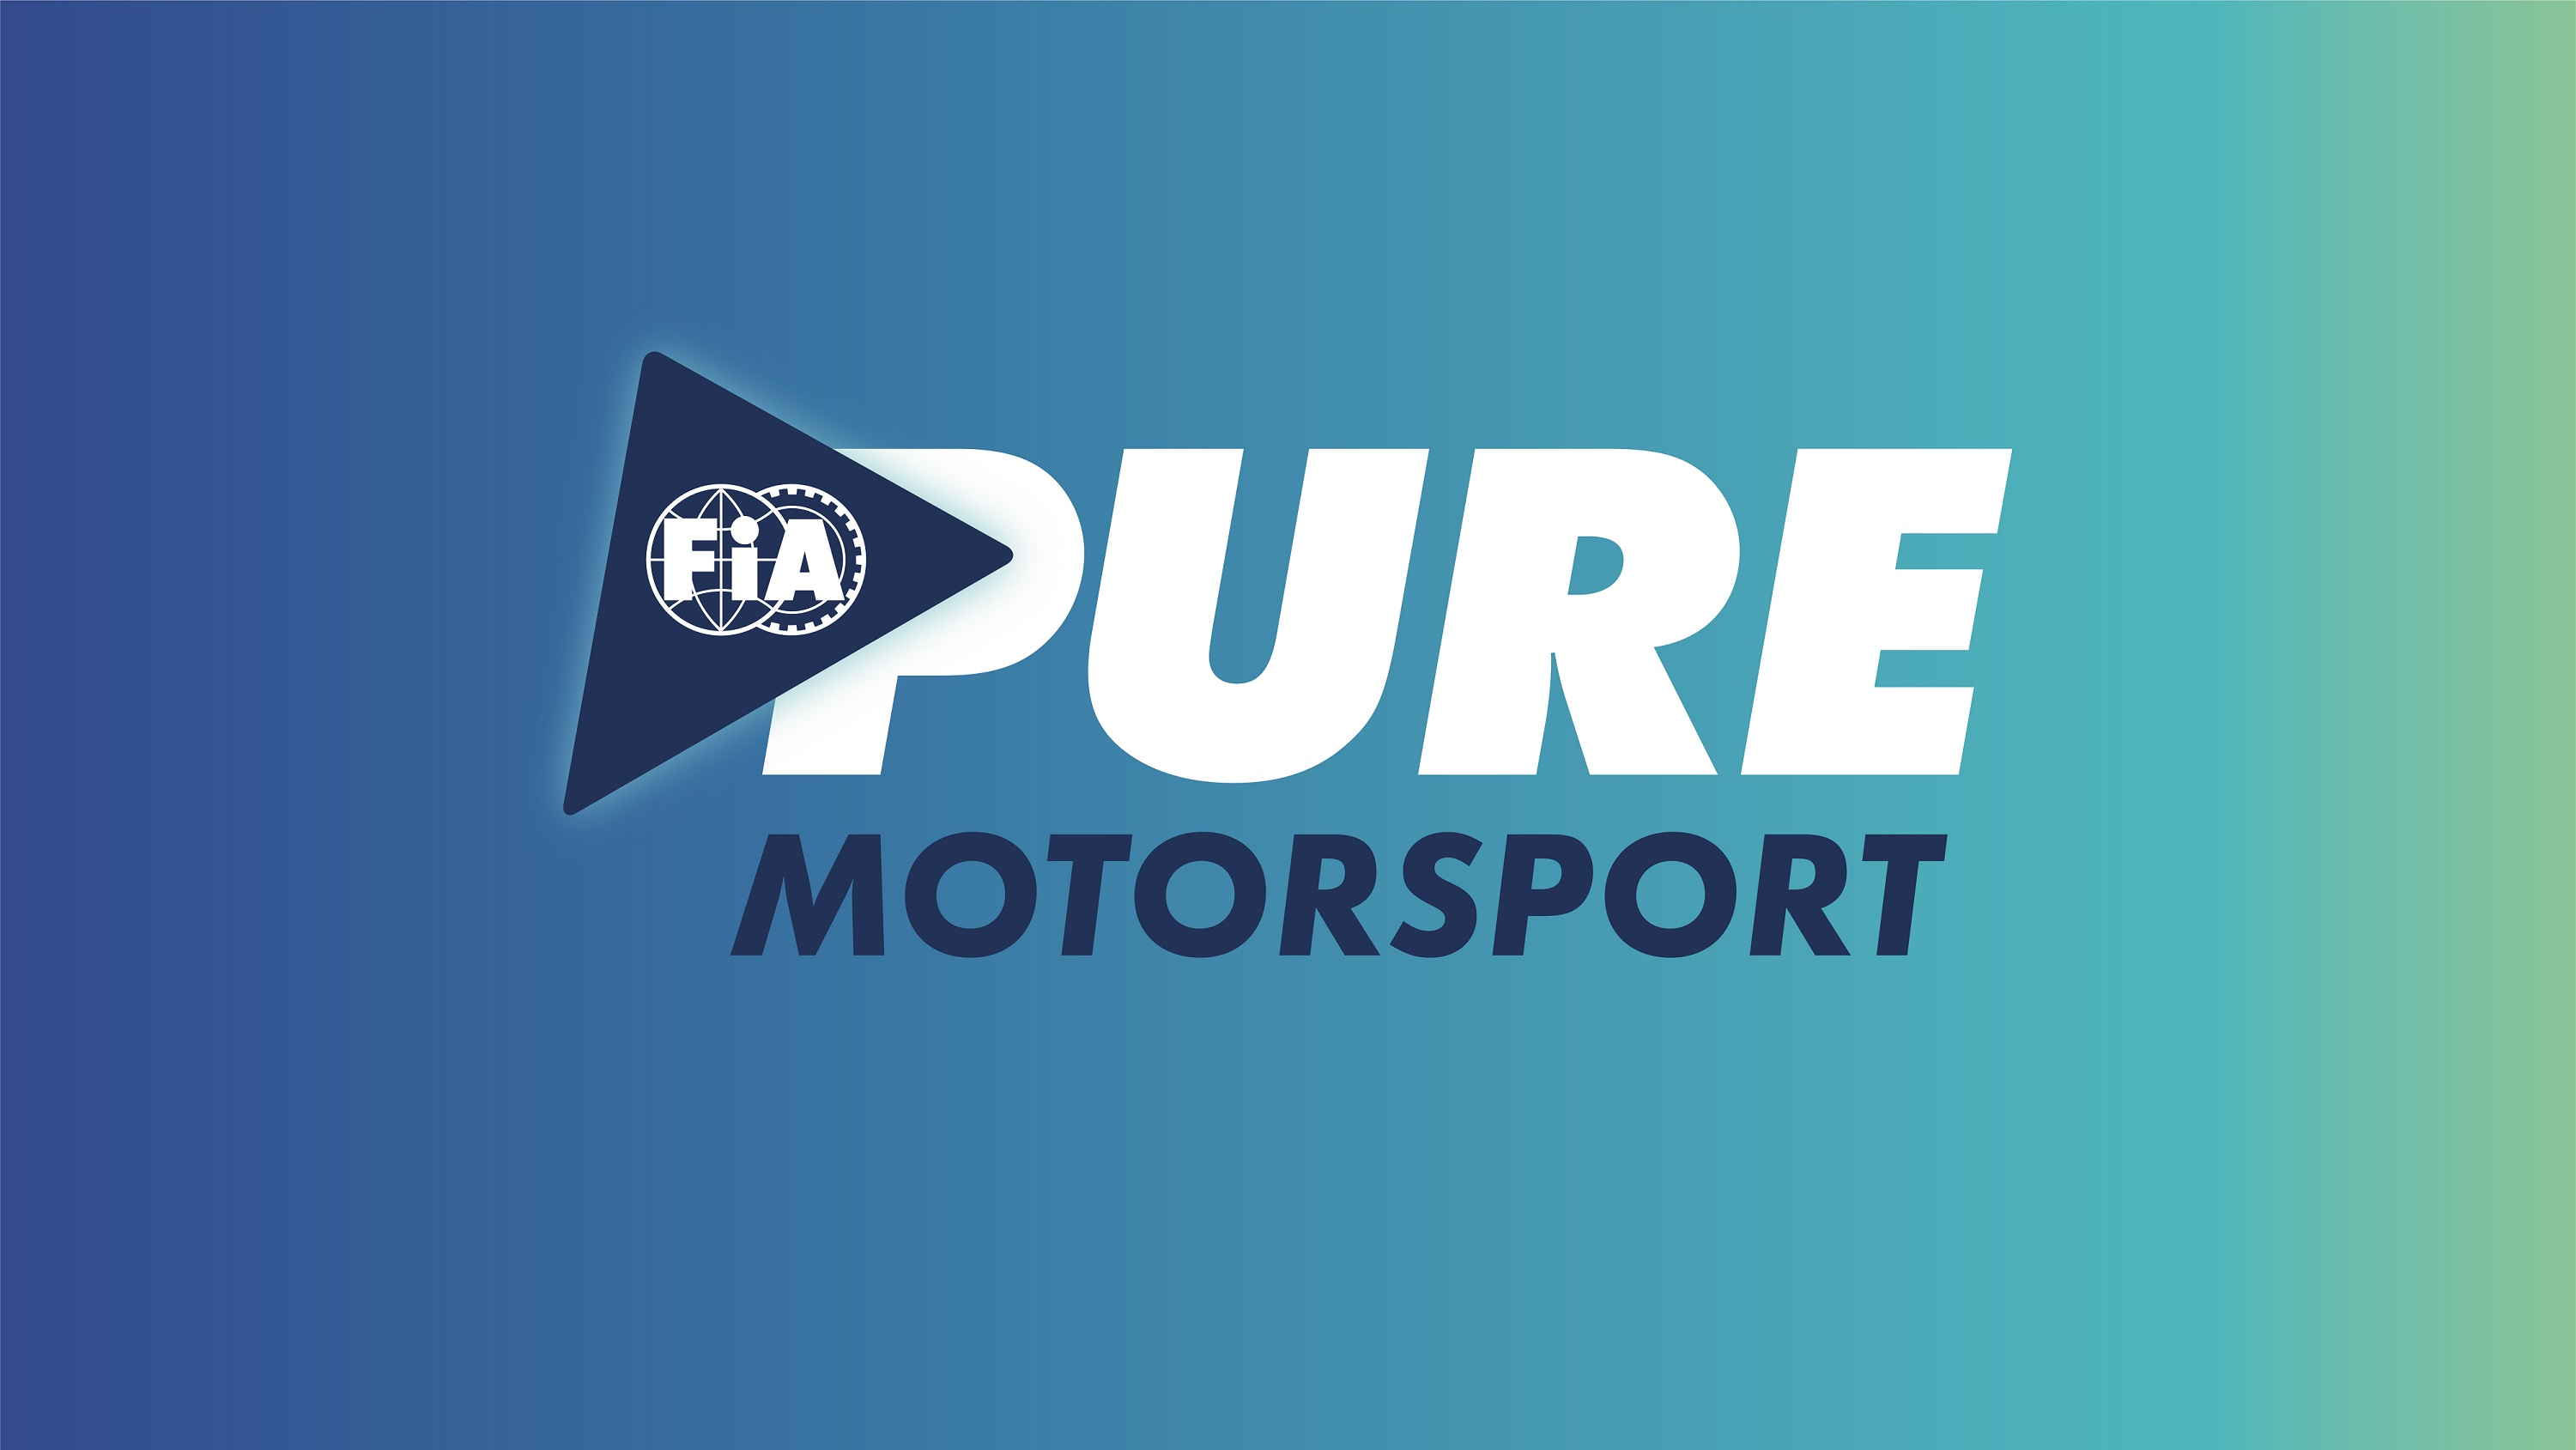 FIA - Pure Motorsport - 2022 Magazine - 26min highlight shows